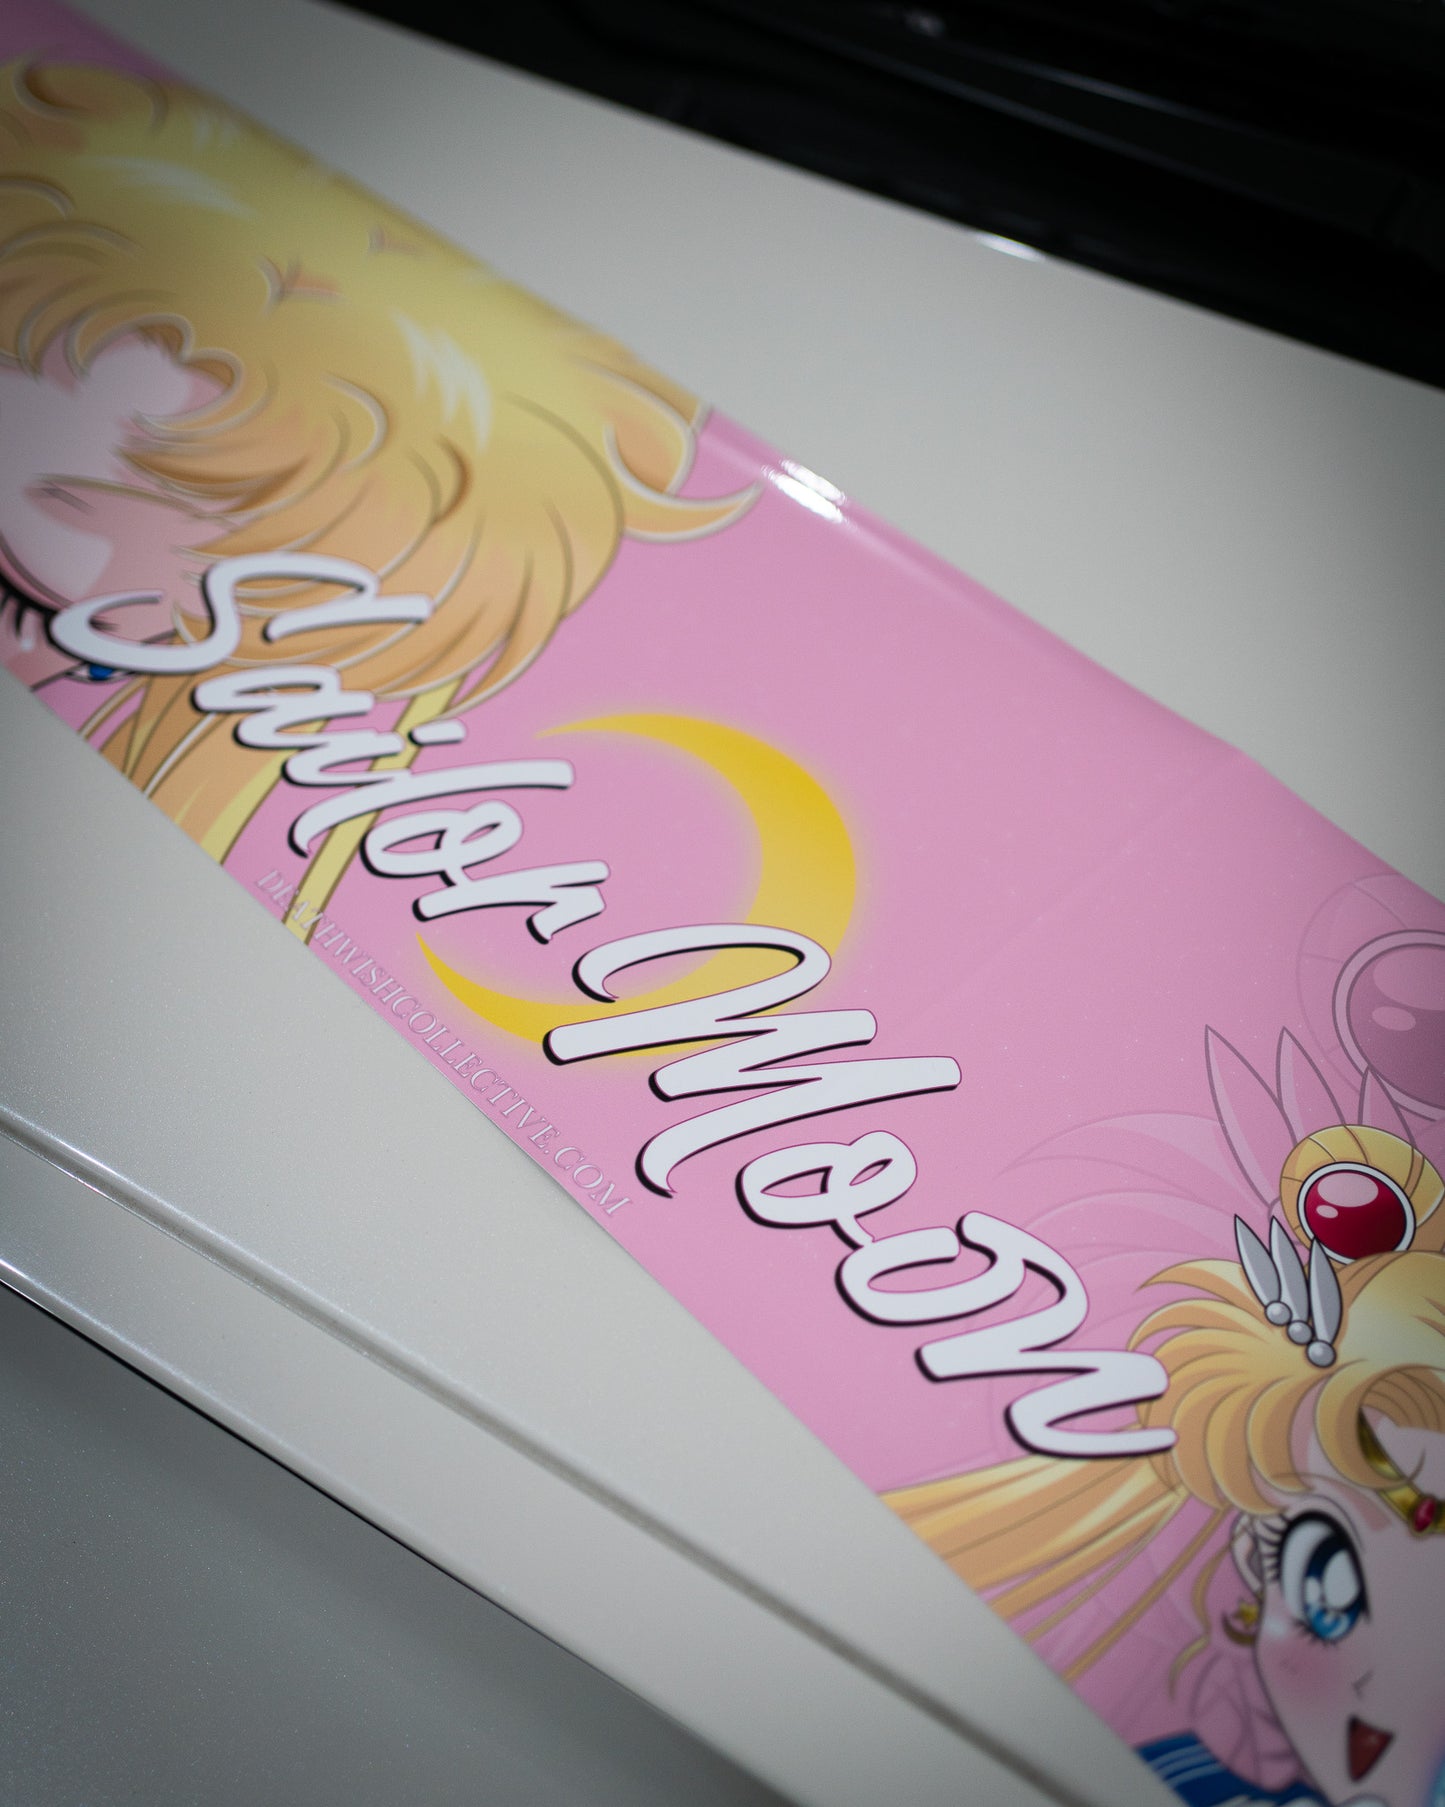 Sailor Moon Banner